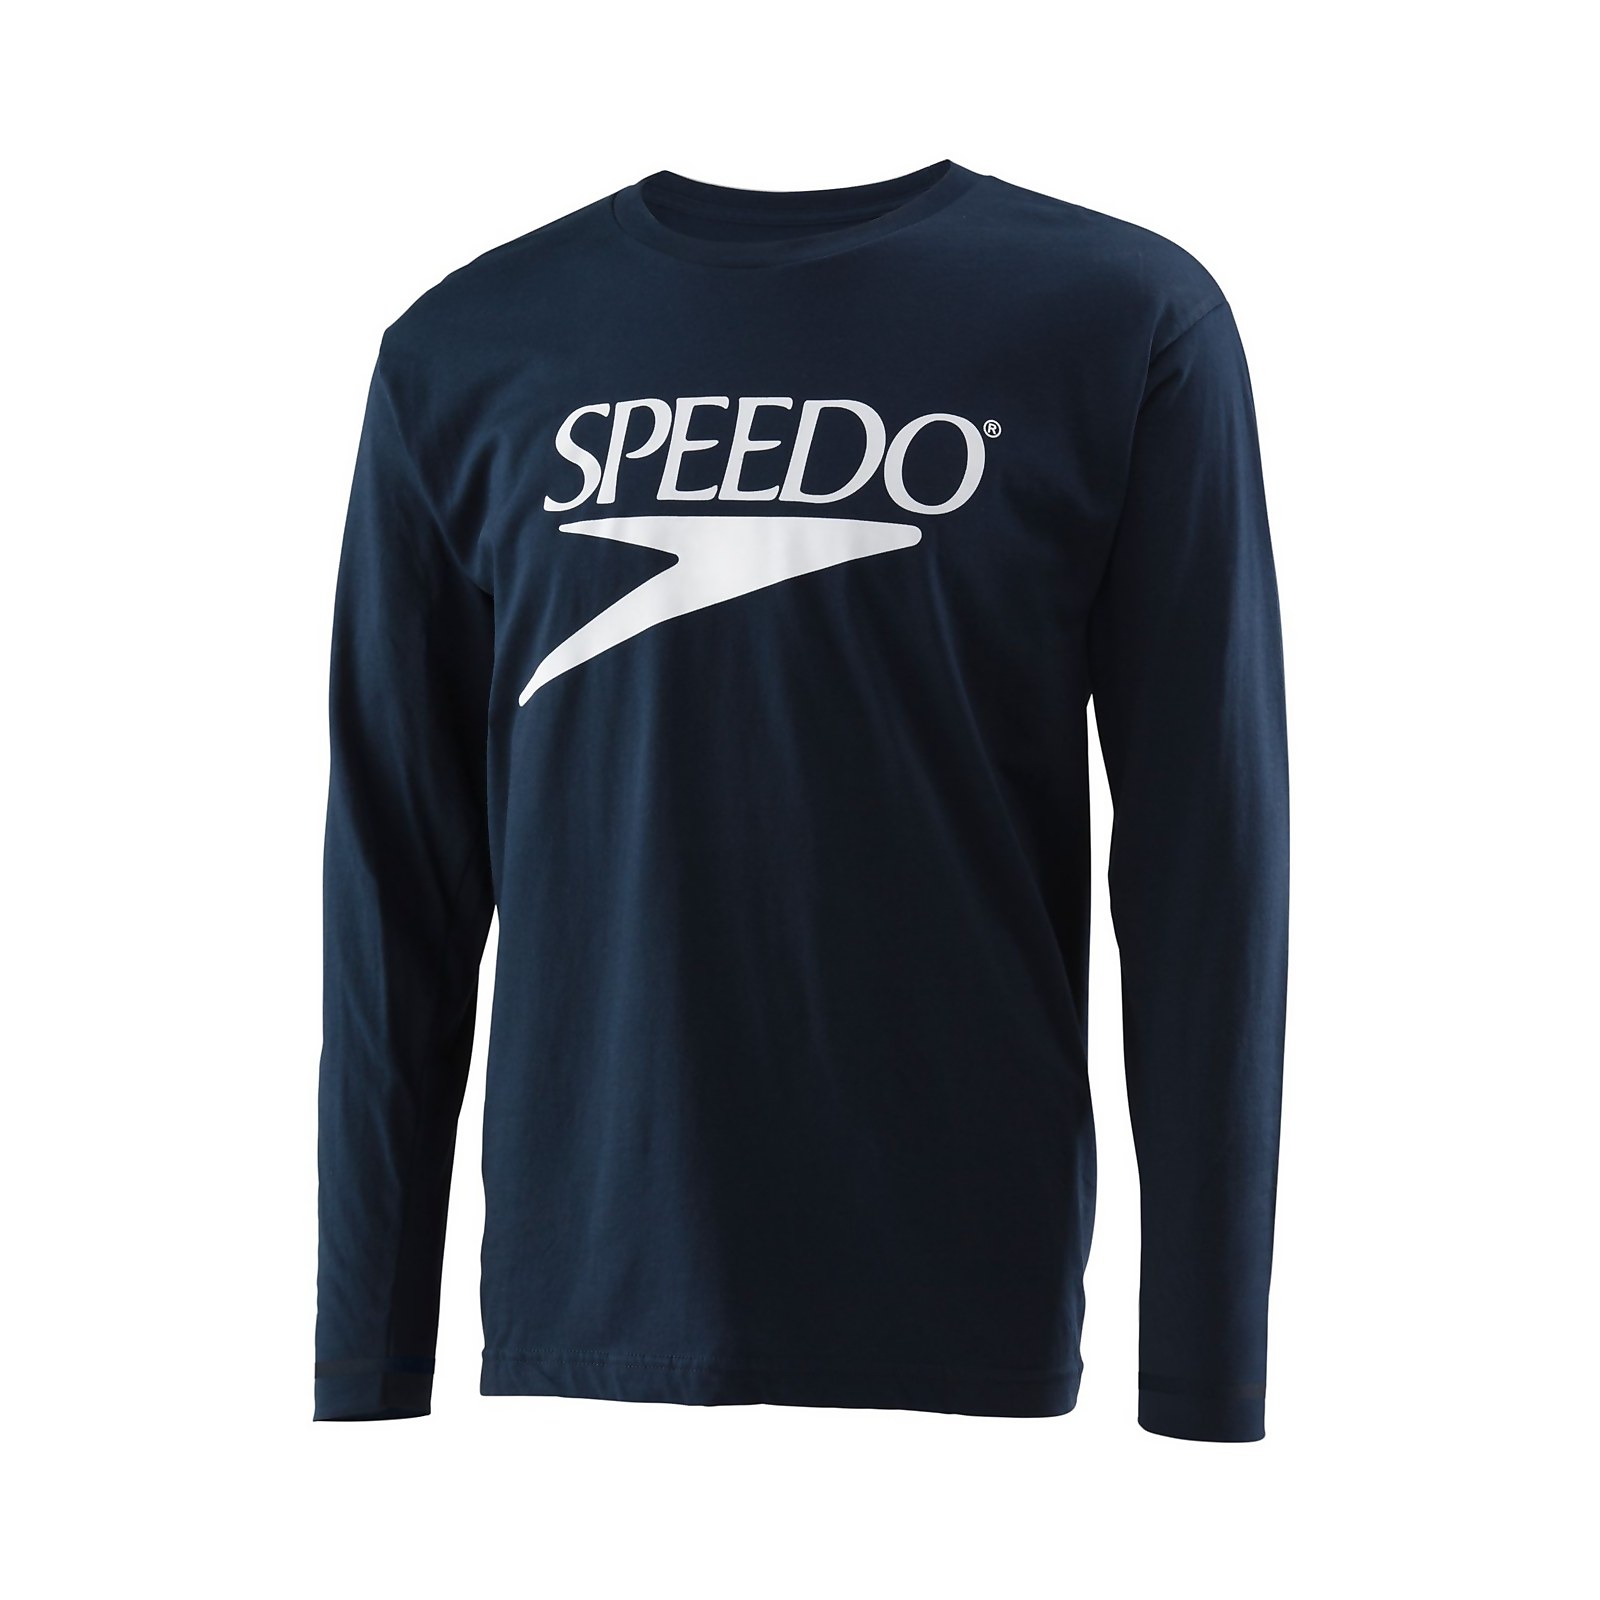 Speedo  Vintage Logo Long Sleeve Tee - L    : Navy